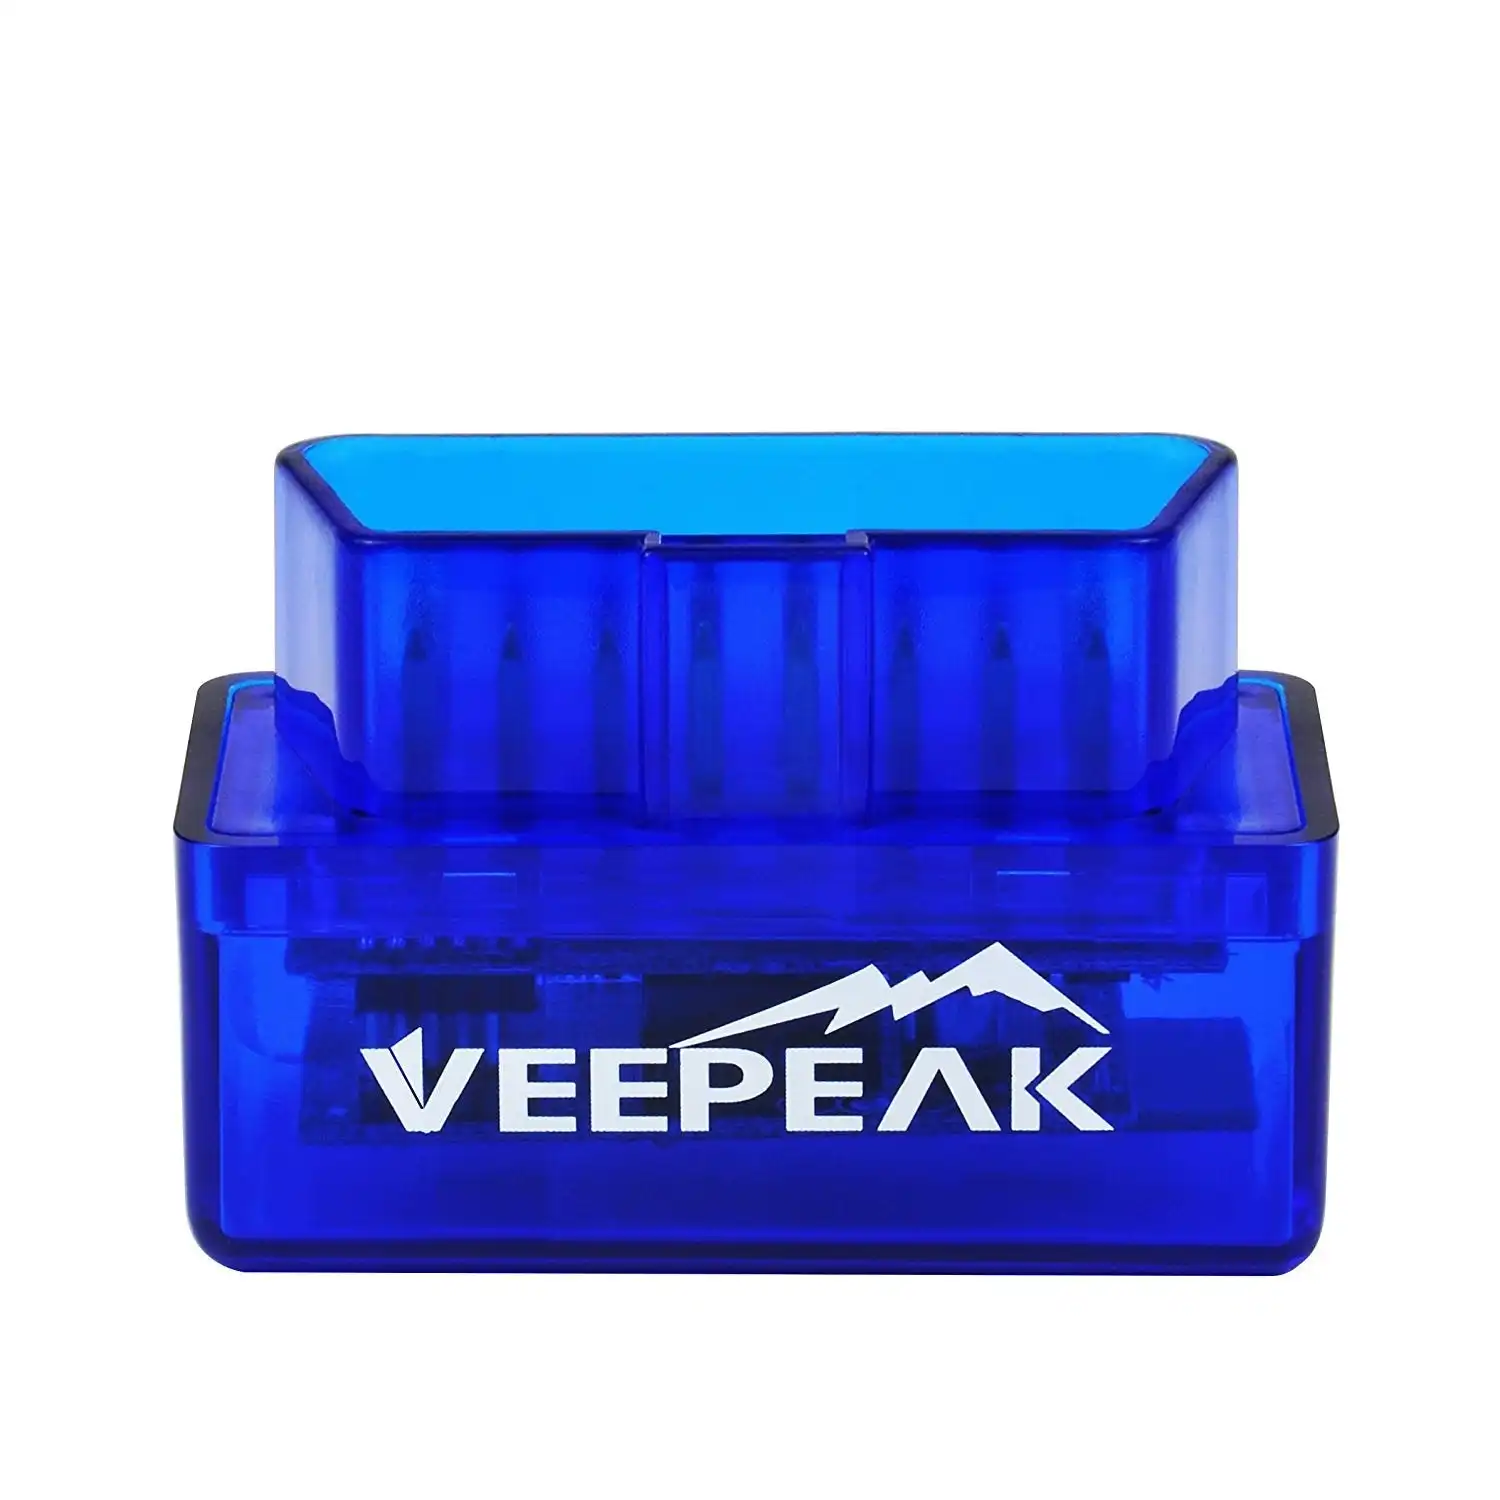 Veepeak Mini Bluetooth OBD2 OBD II Scanner Car Engine Code Reader